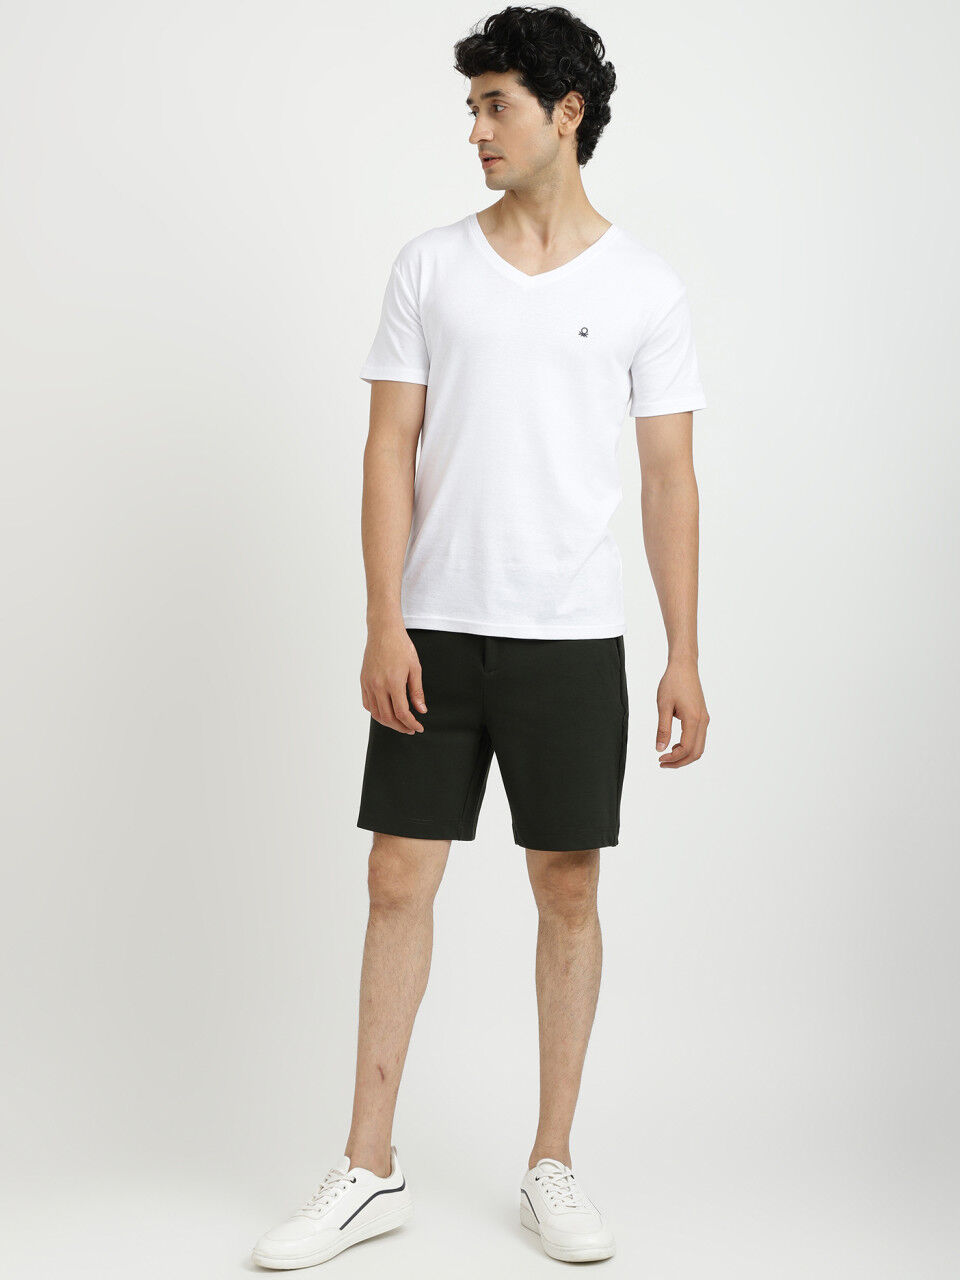 United Colors Of Benetton Black Slim Fit Shorts